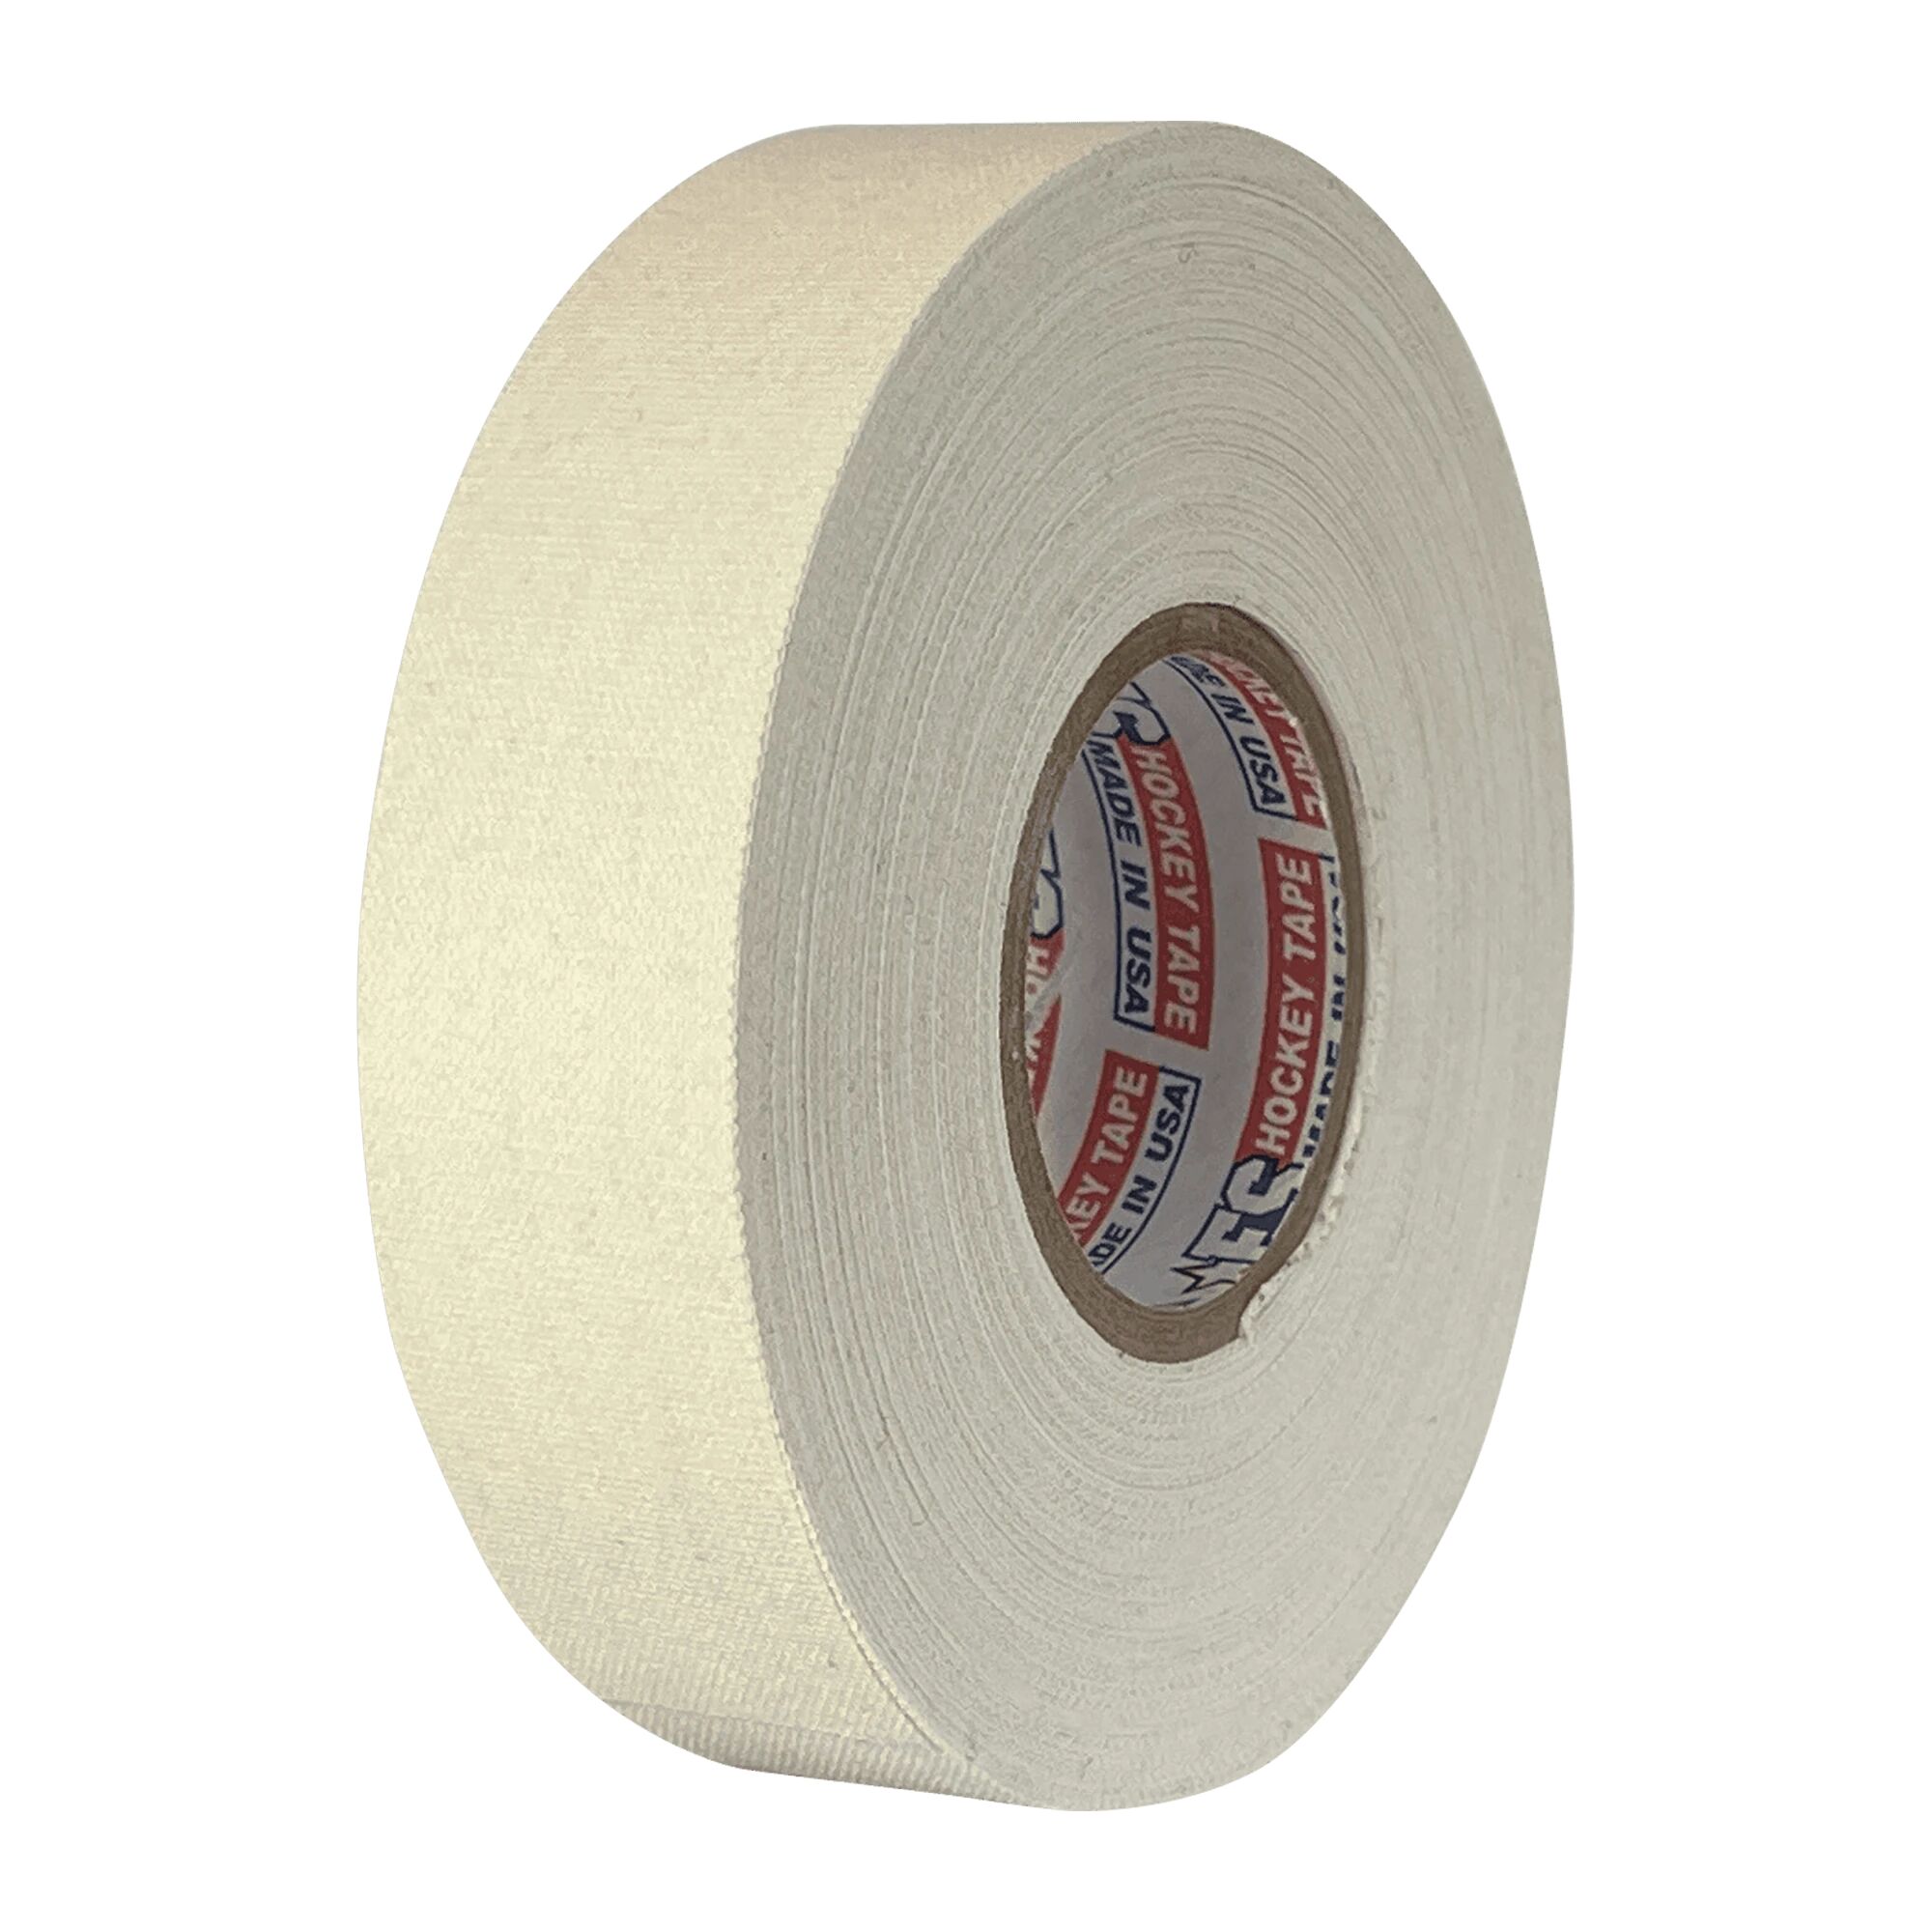 ES tape Cloth Tape 24mmx23m white 60 pack-21/22, hockeytape 24mmx23m White